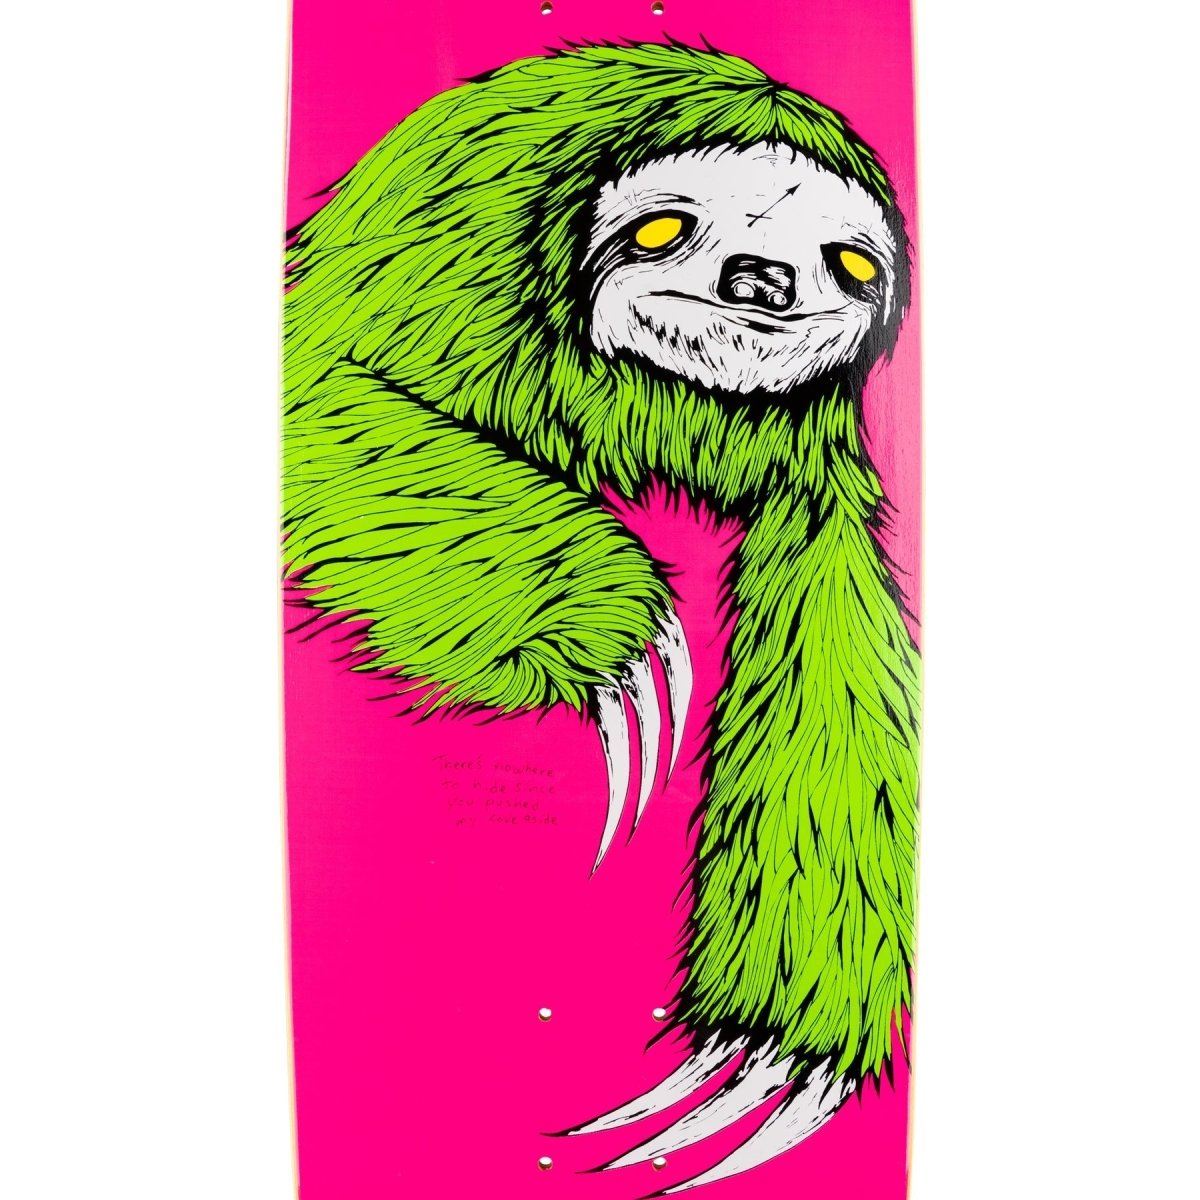 WLCM Sloth on Boline 2.0 Egg - Neon Pink - 9.5" wb14.5 - Skateboard - Decks